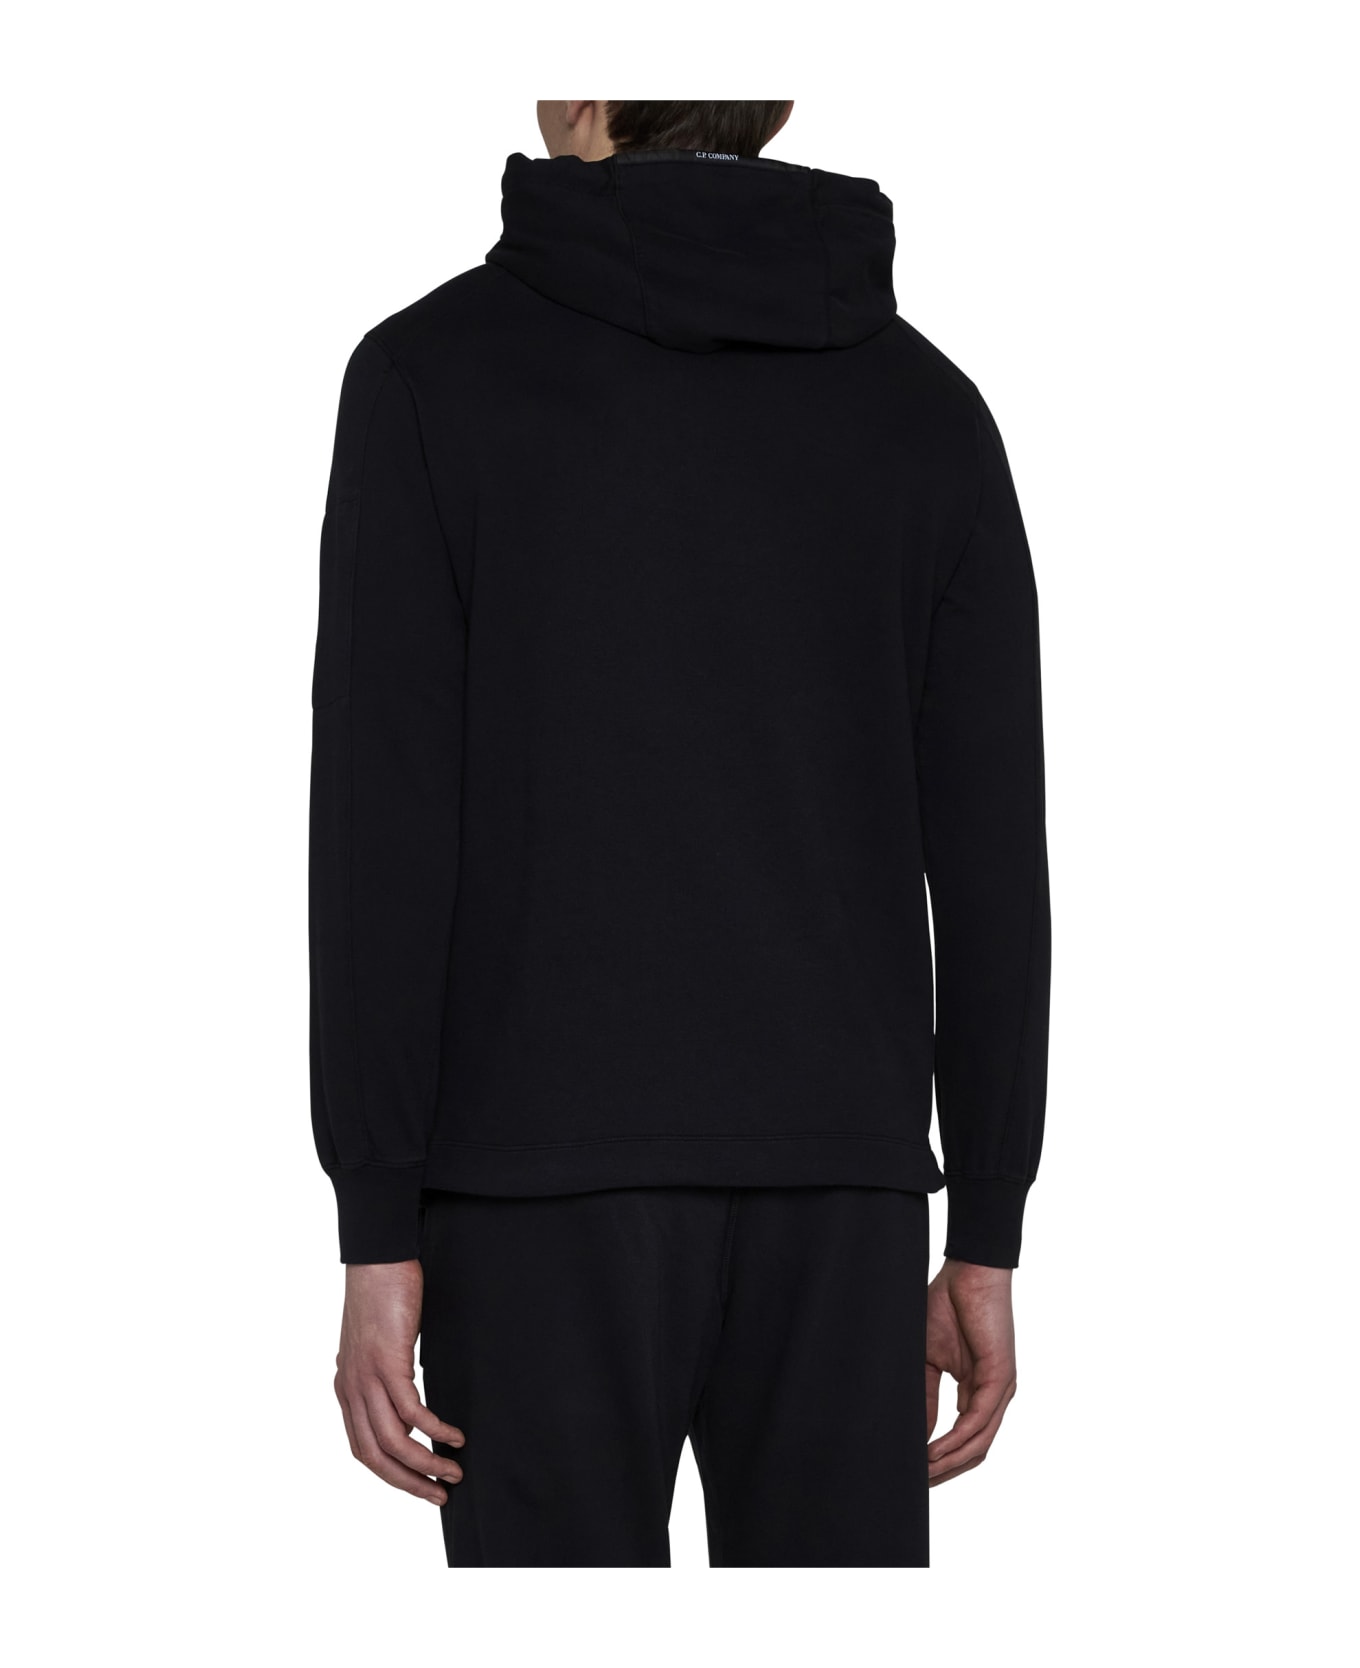 C.P. Company Light Fleece Hooded Sweatshirt - Black